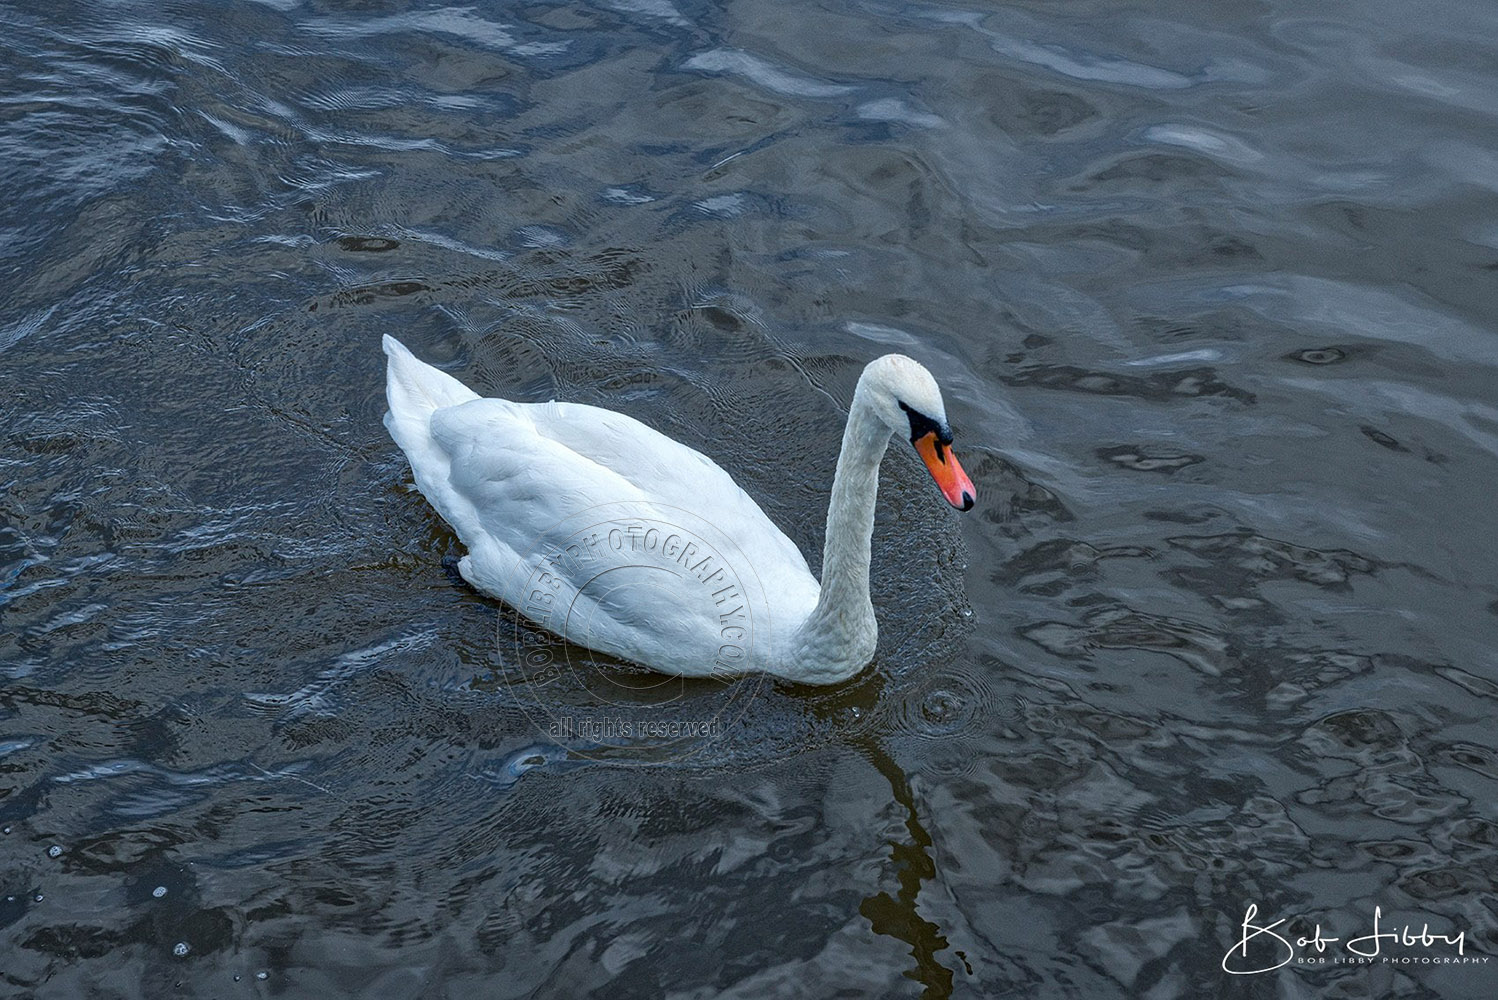 White Swan on the Danube River